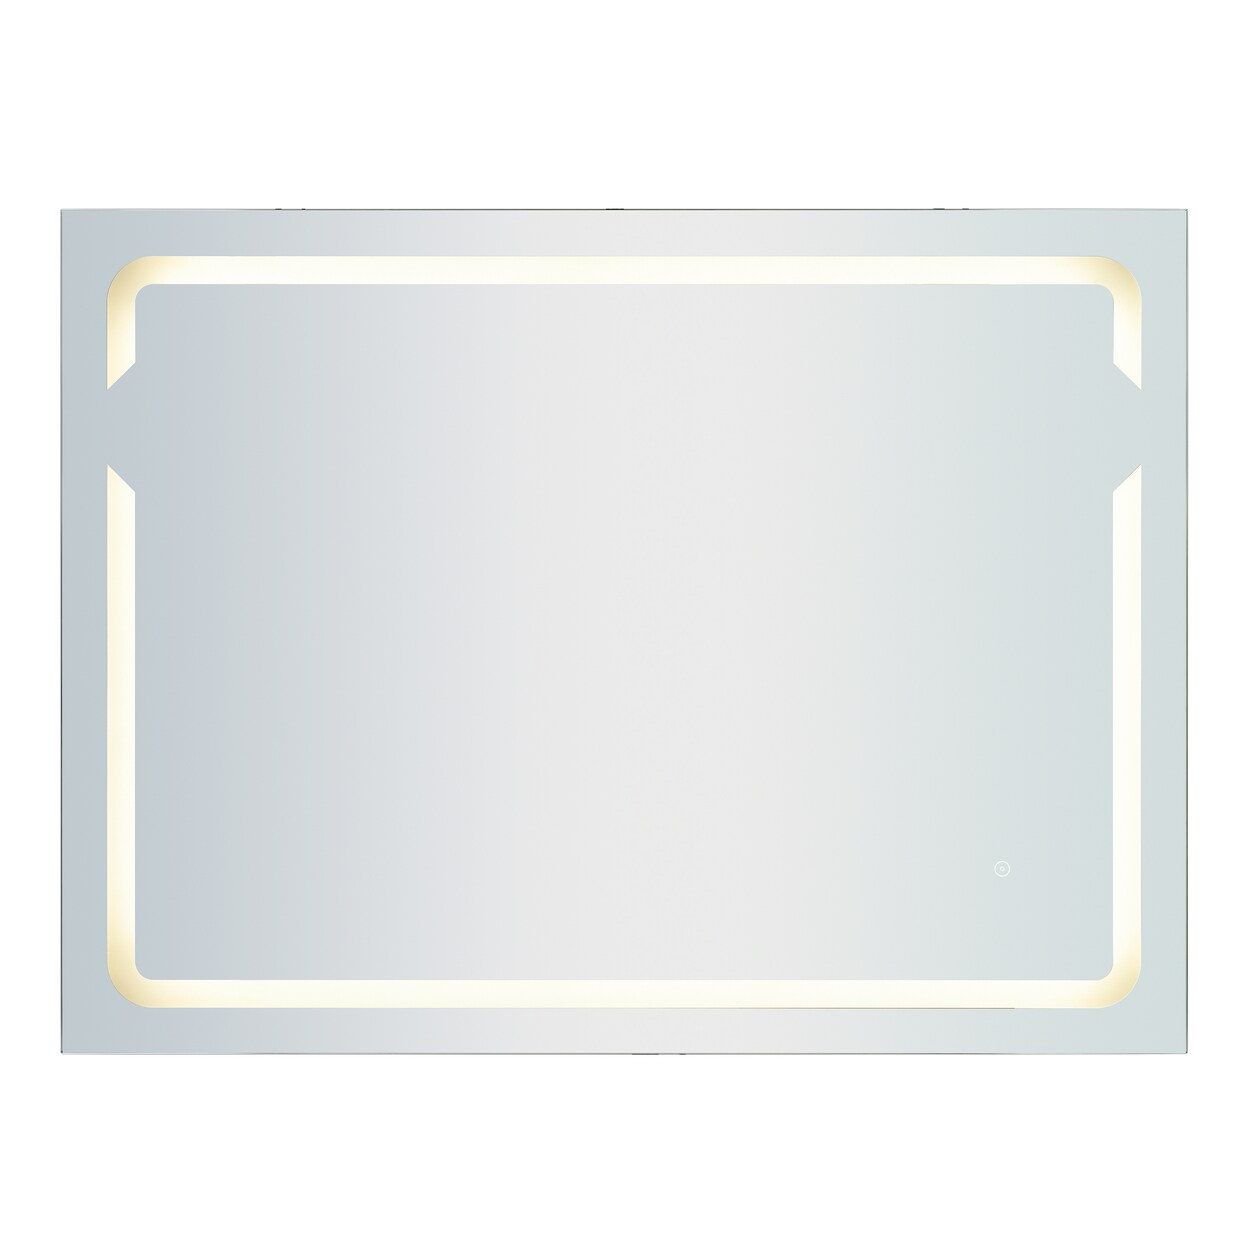 Elk Showroom LED Wall Mirror - 48x36